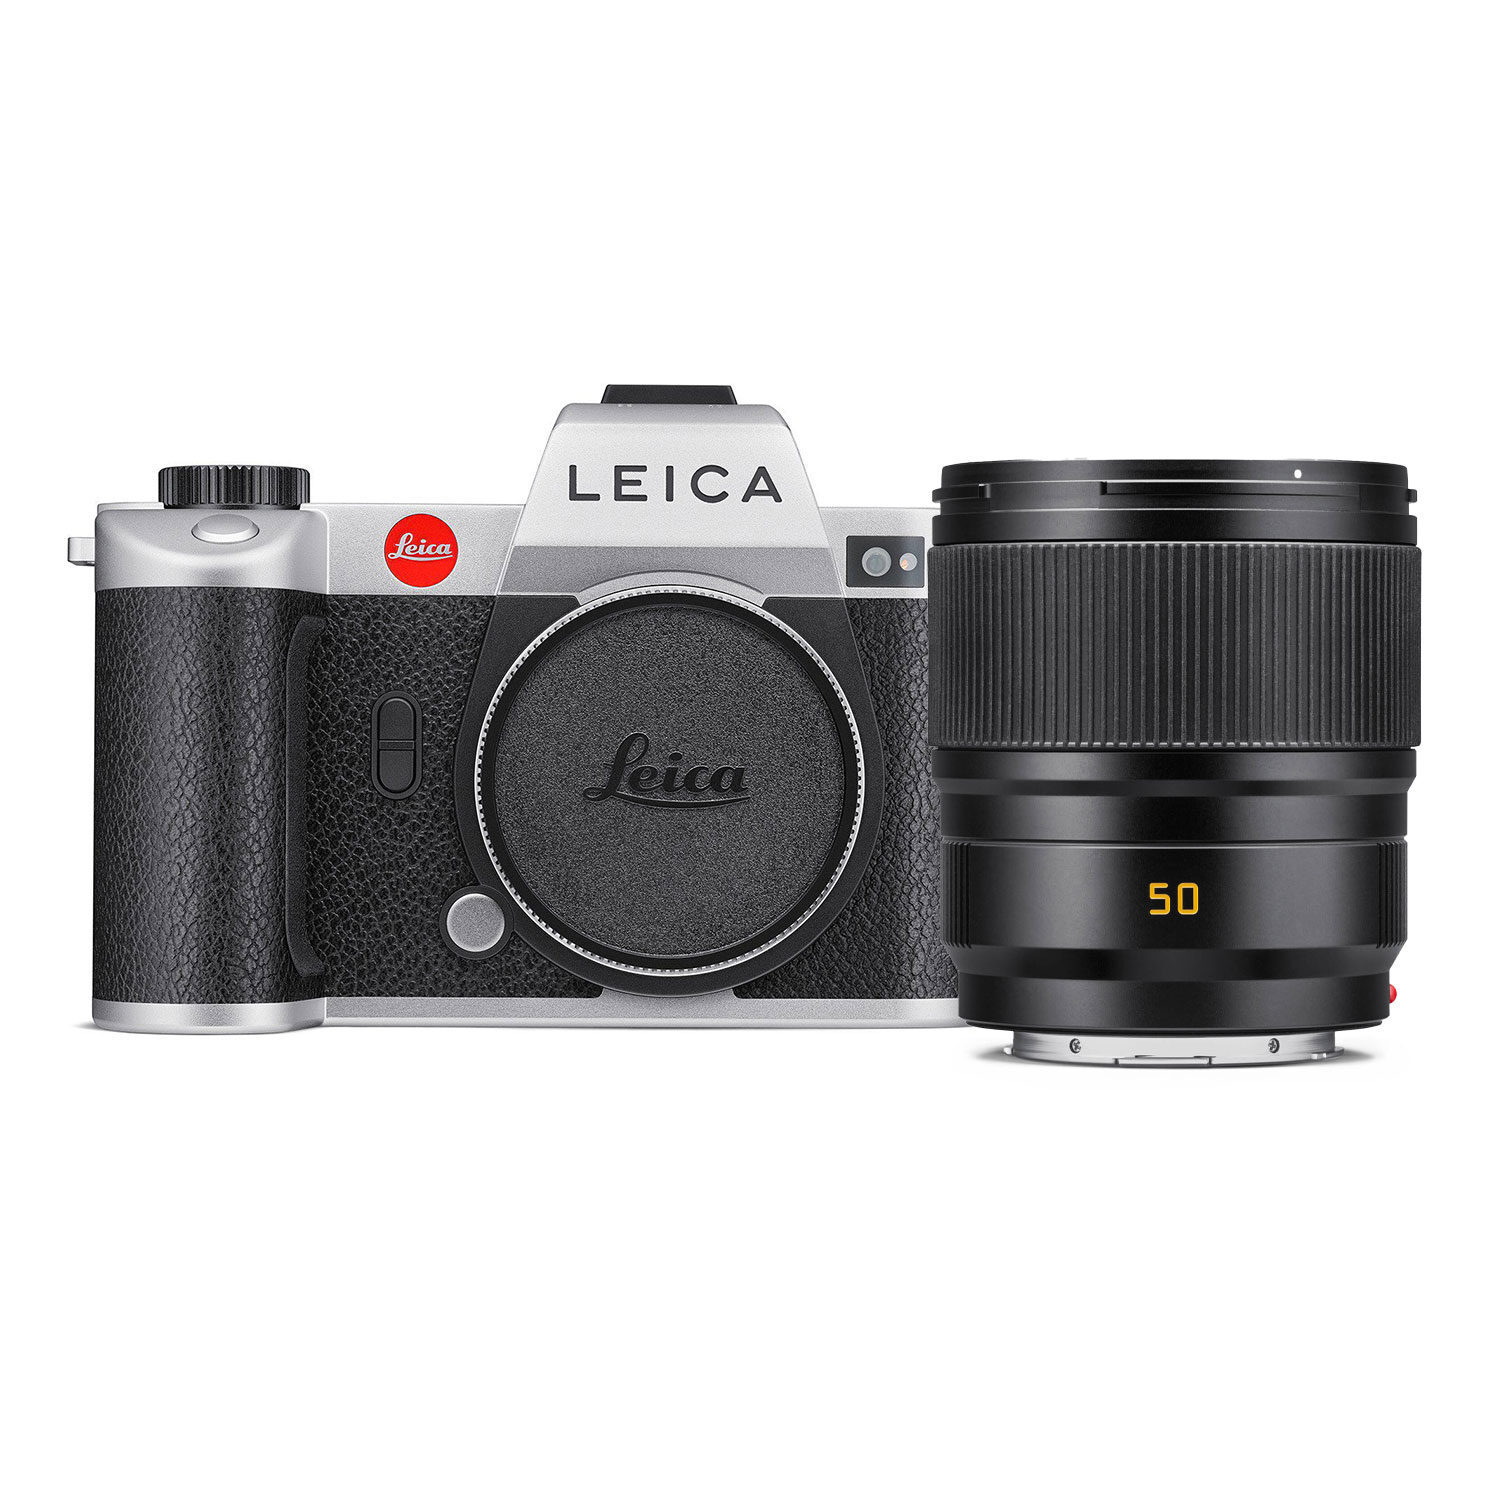 Leica SL2 systeemcamera Zilver + Summicron 50mm f/2.0 comp objectief